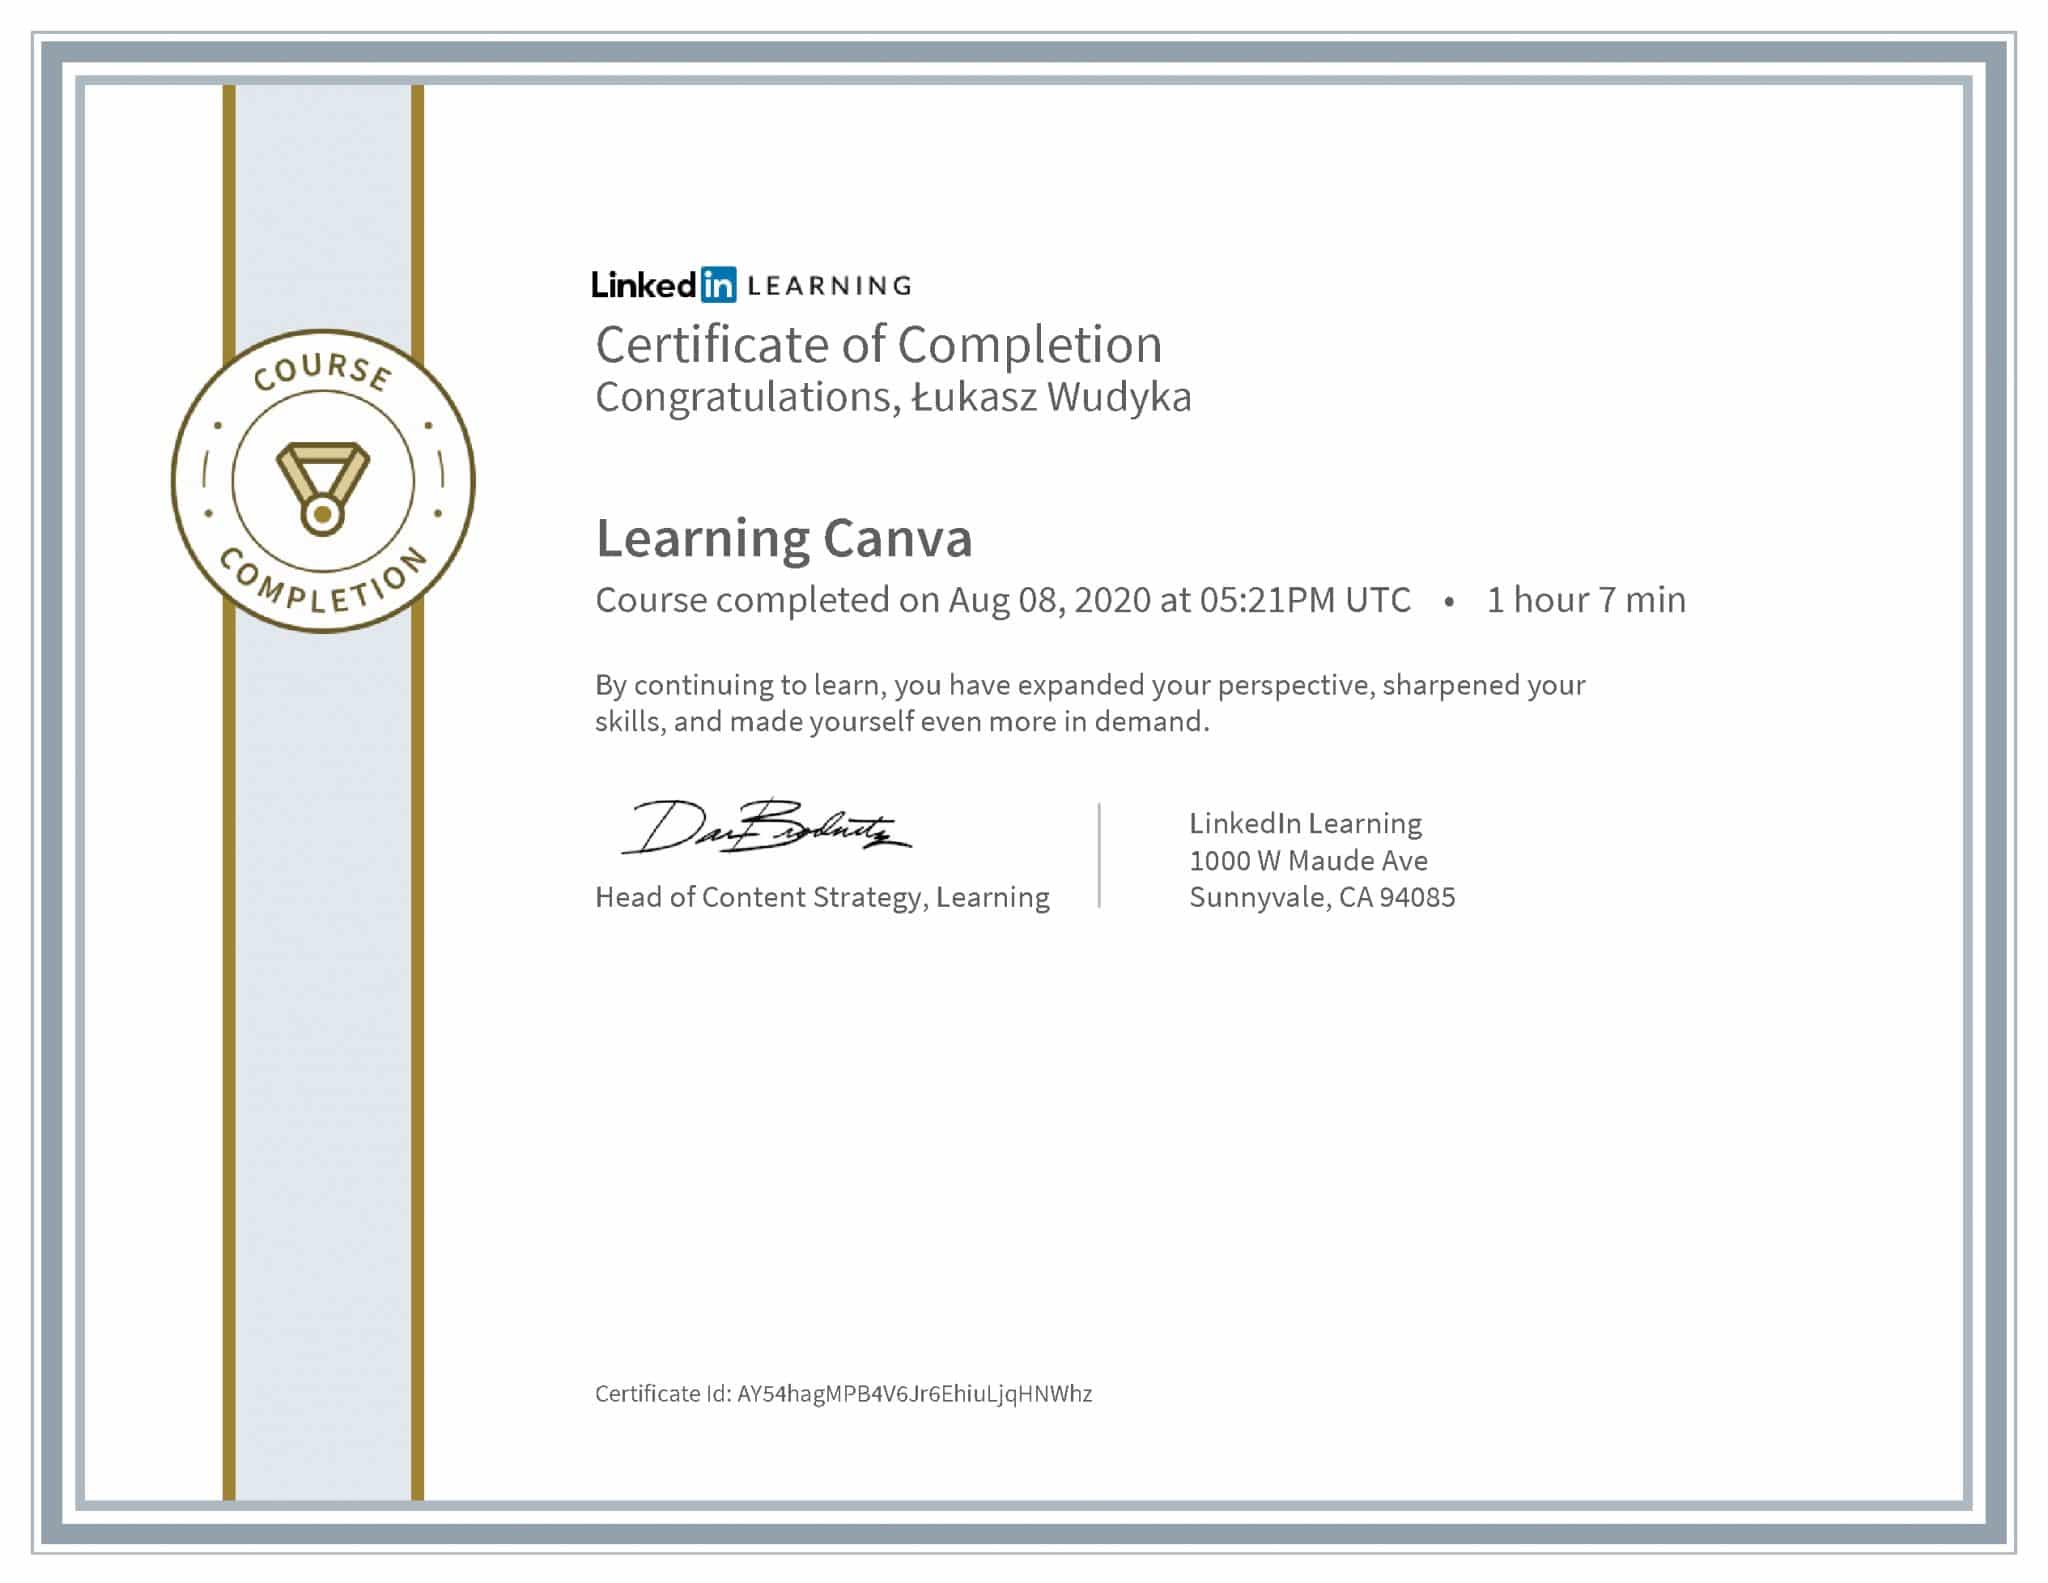 Łukasz Wudyka certyfikat LinkedIn Learning Canva